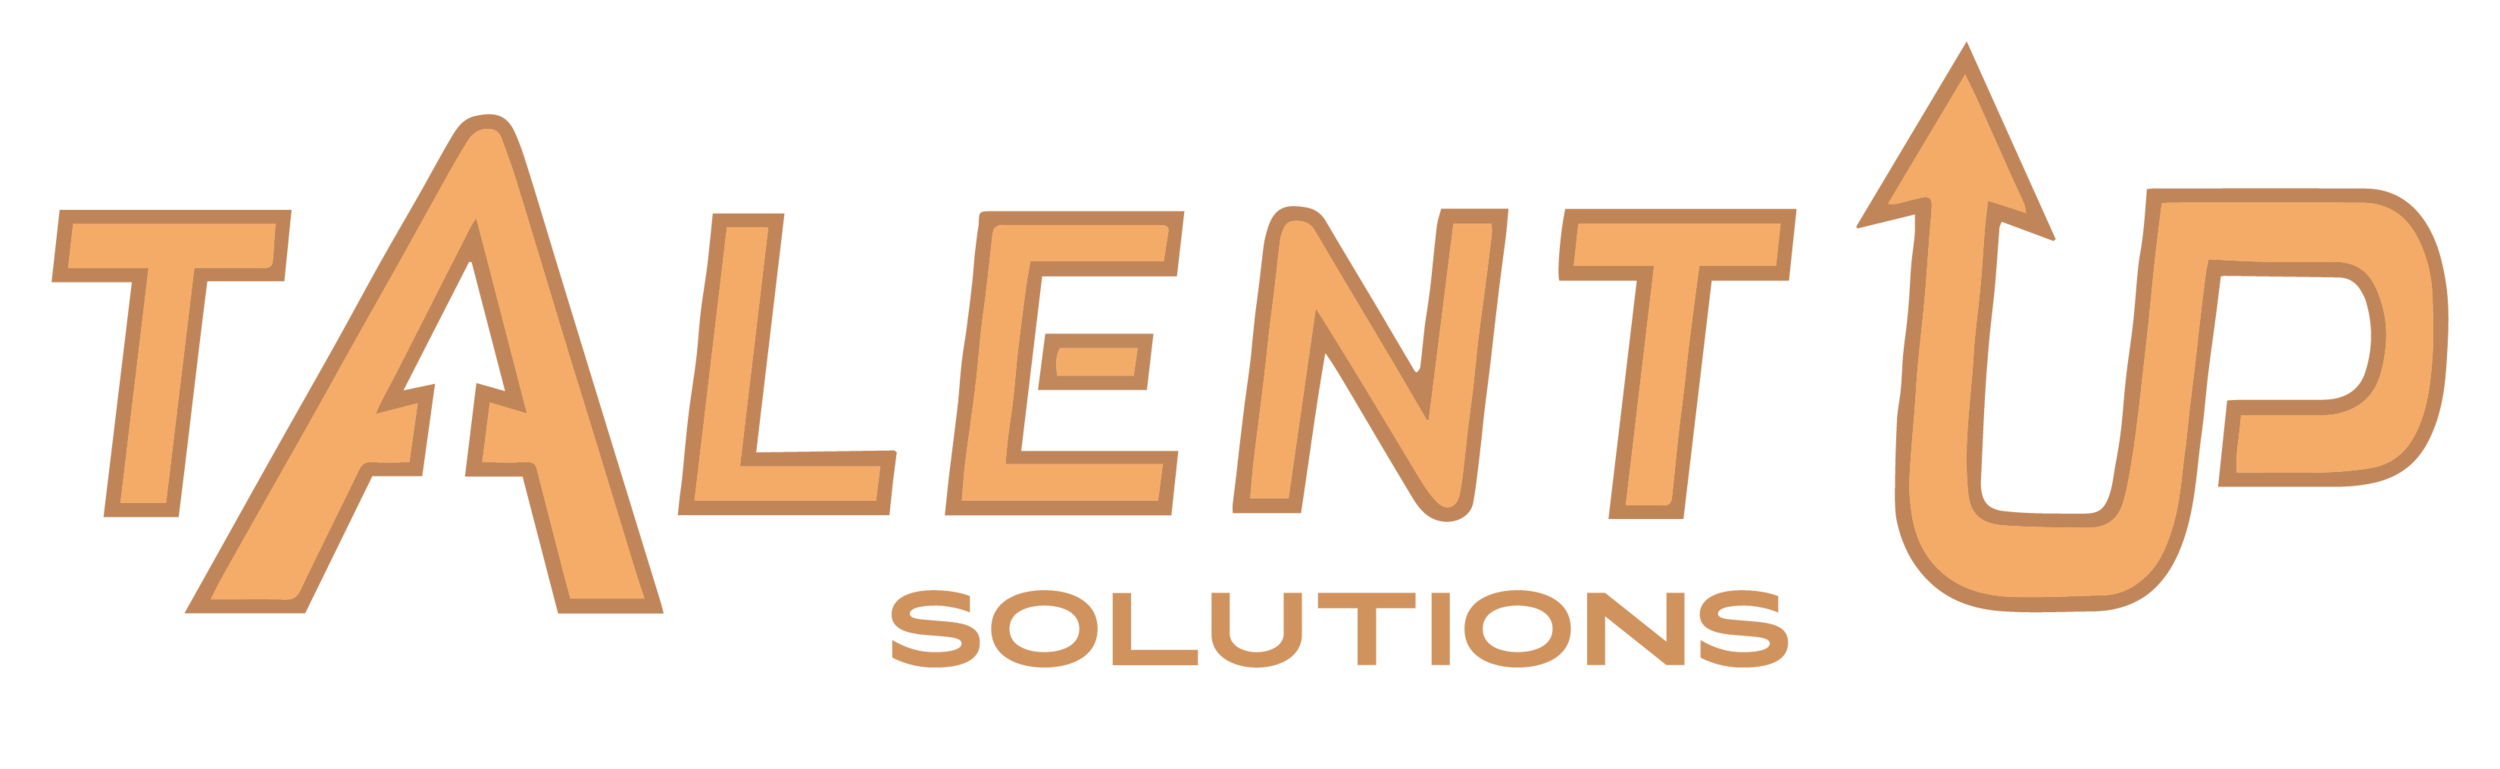 TalentUpSolutions_Logo (1).png